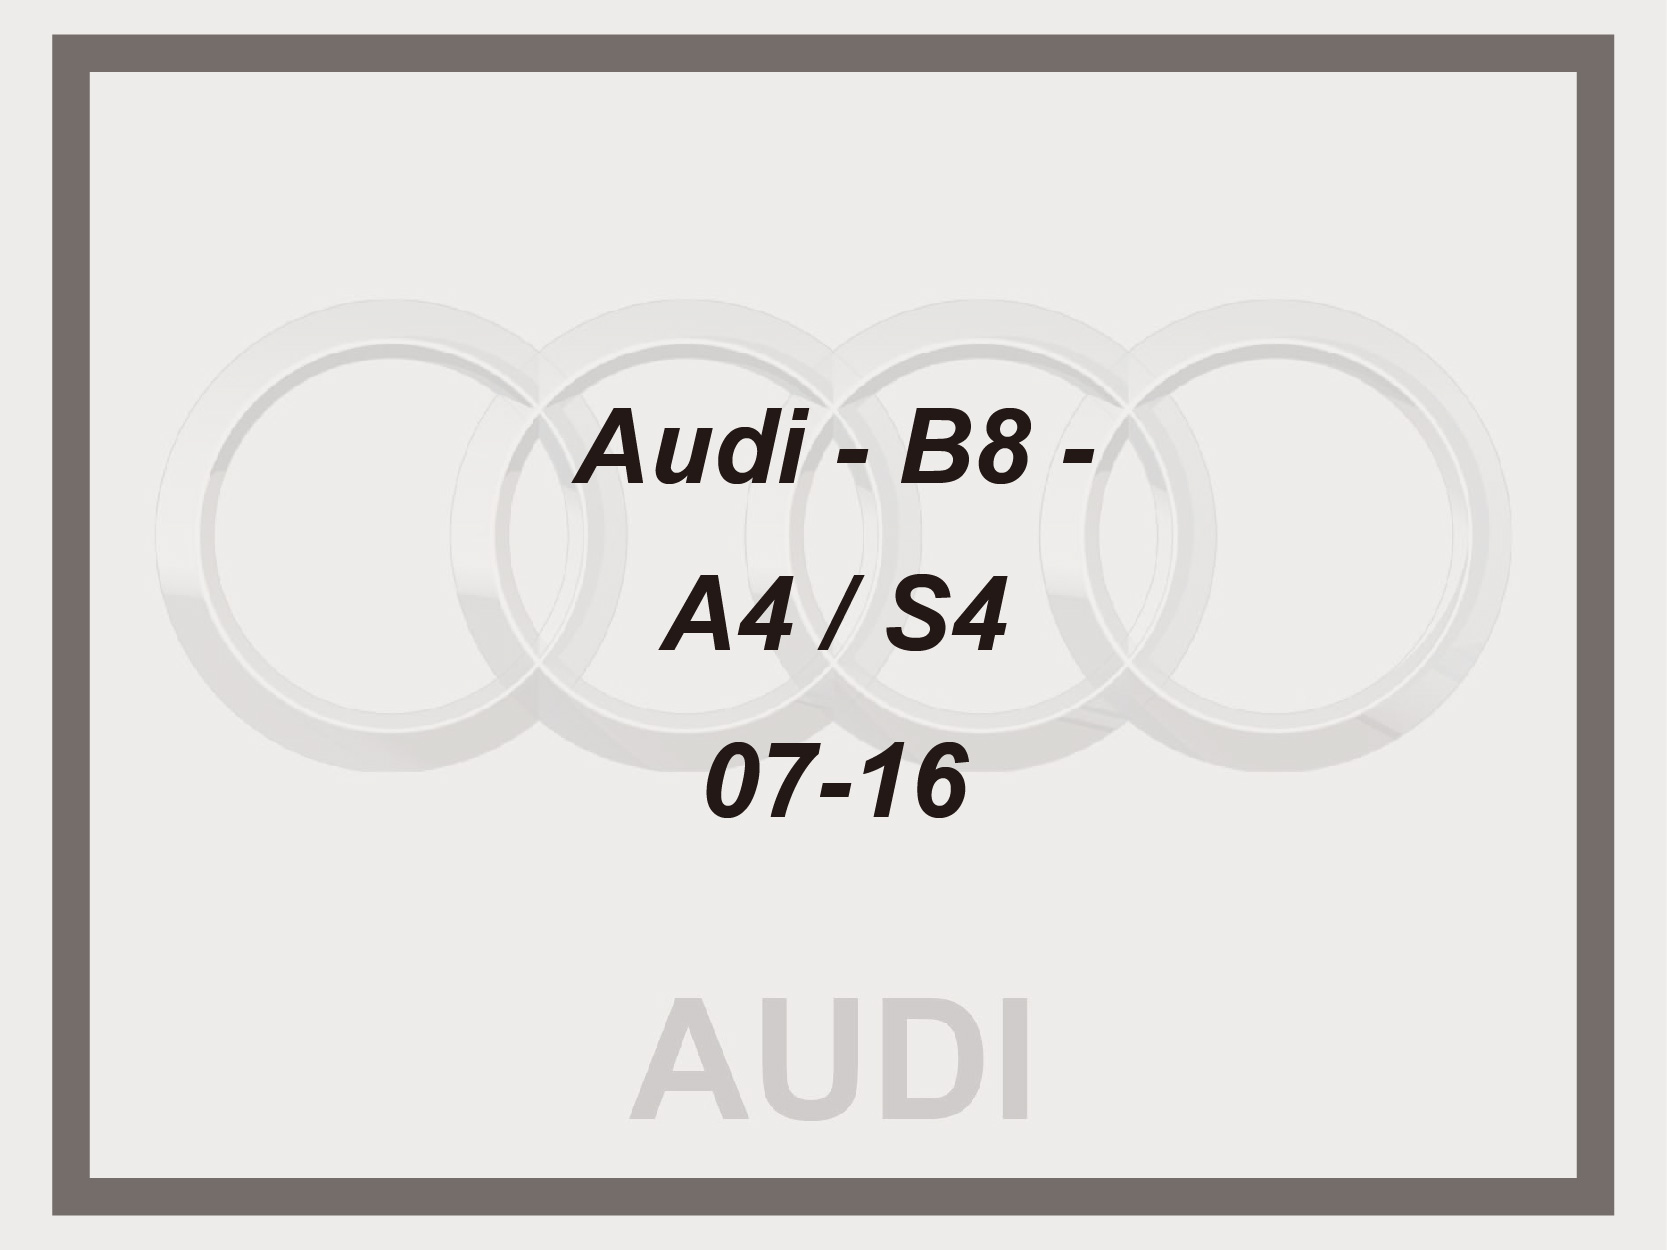 Audi - B8 - A4 / S4 - 07-16